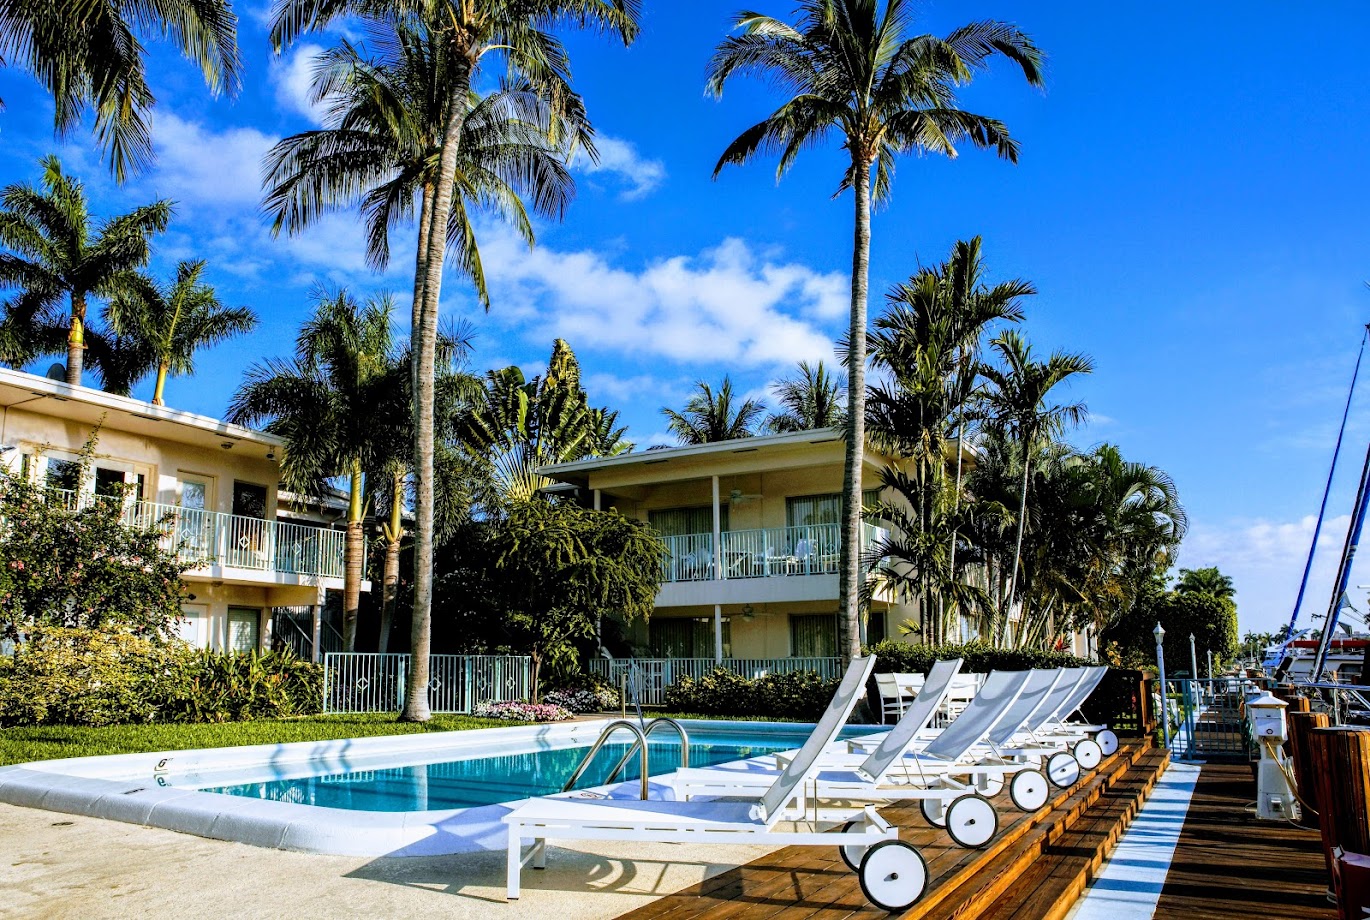 Villa Venezia - Hotel Fort Lauderdale